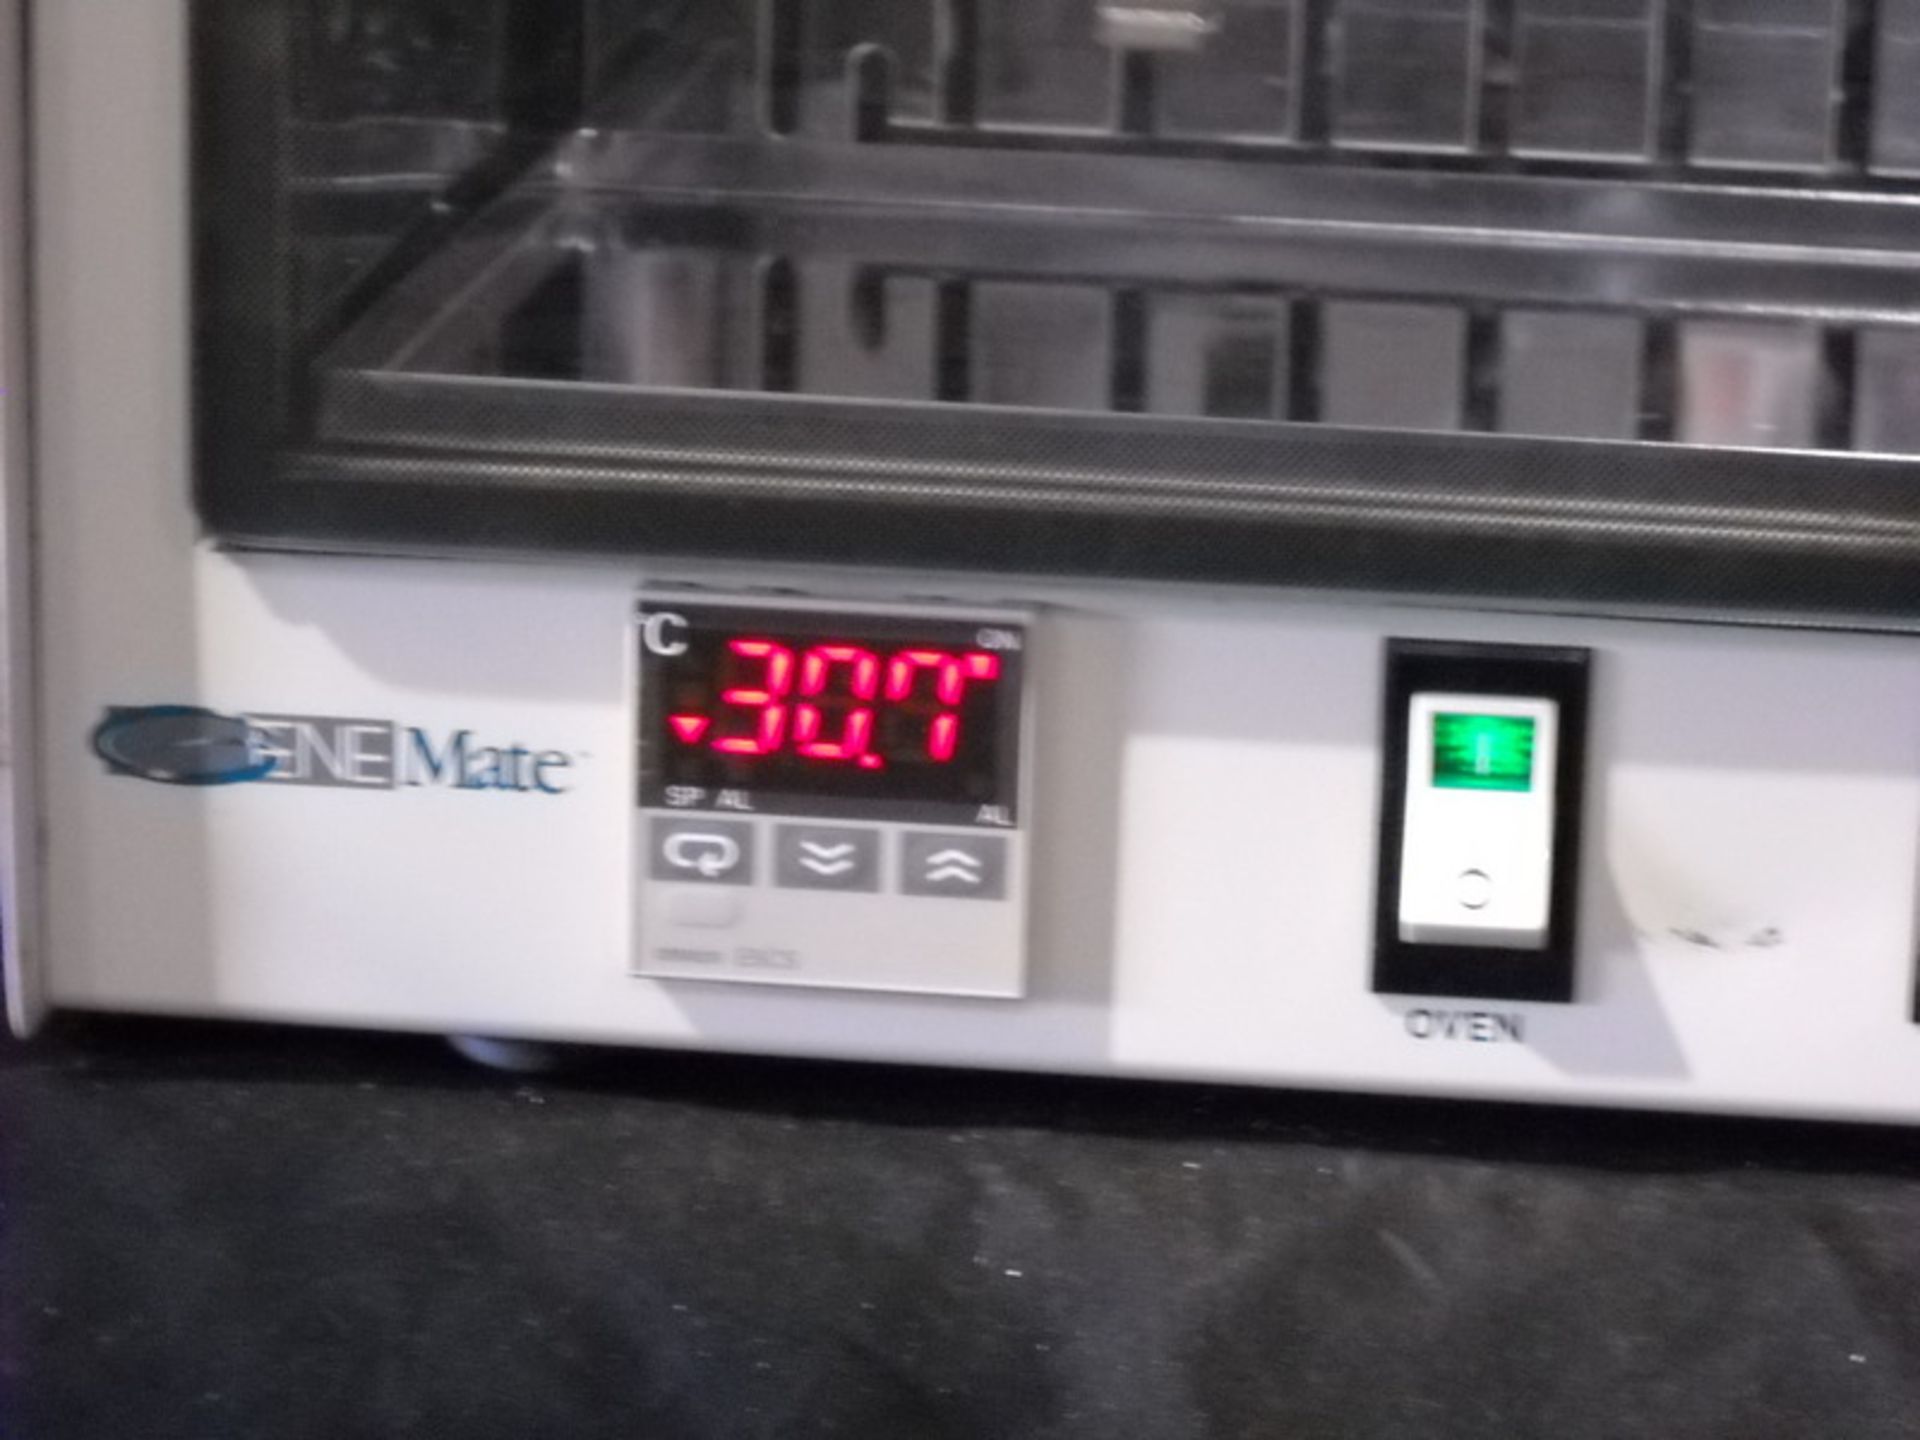 Gene Mate HO 4000 Hybridization Oven Incubator H-8950-1, Qty 1, 223394119461 - Image 3 of 7